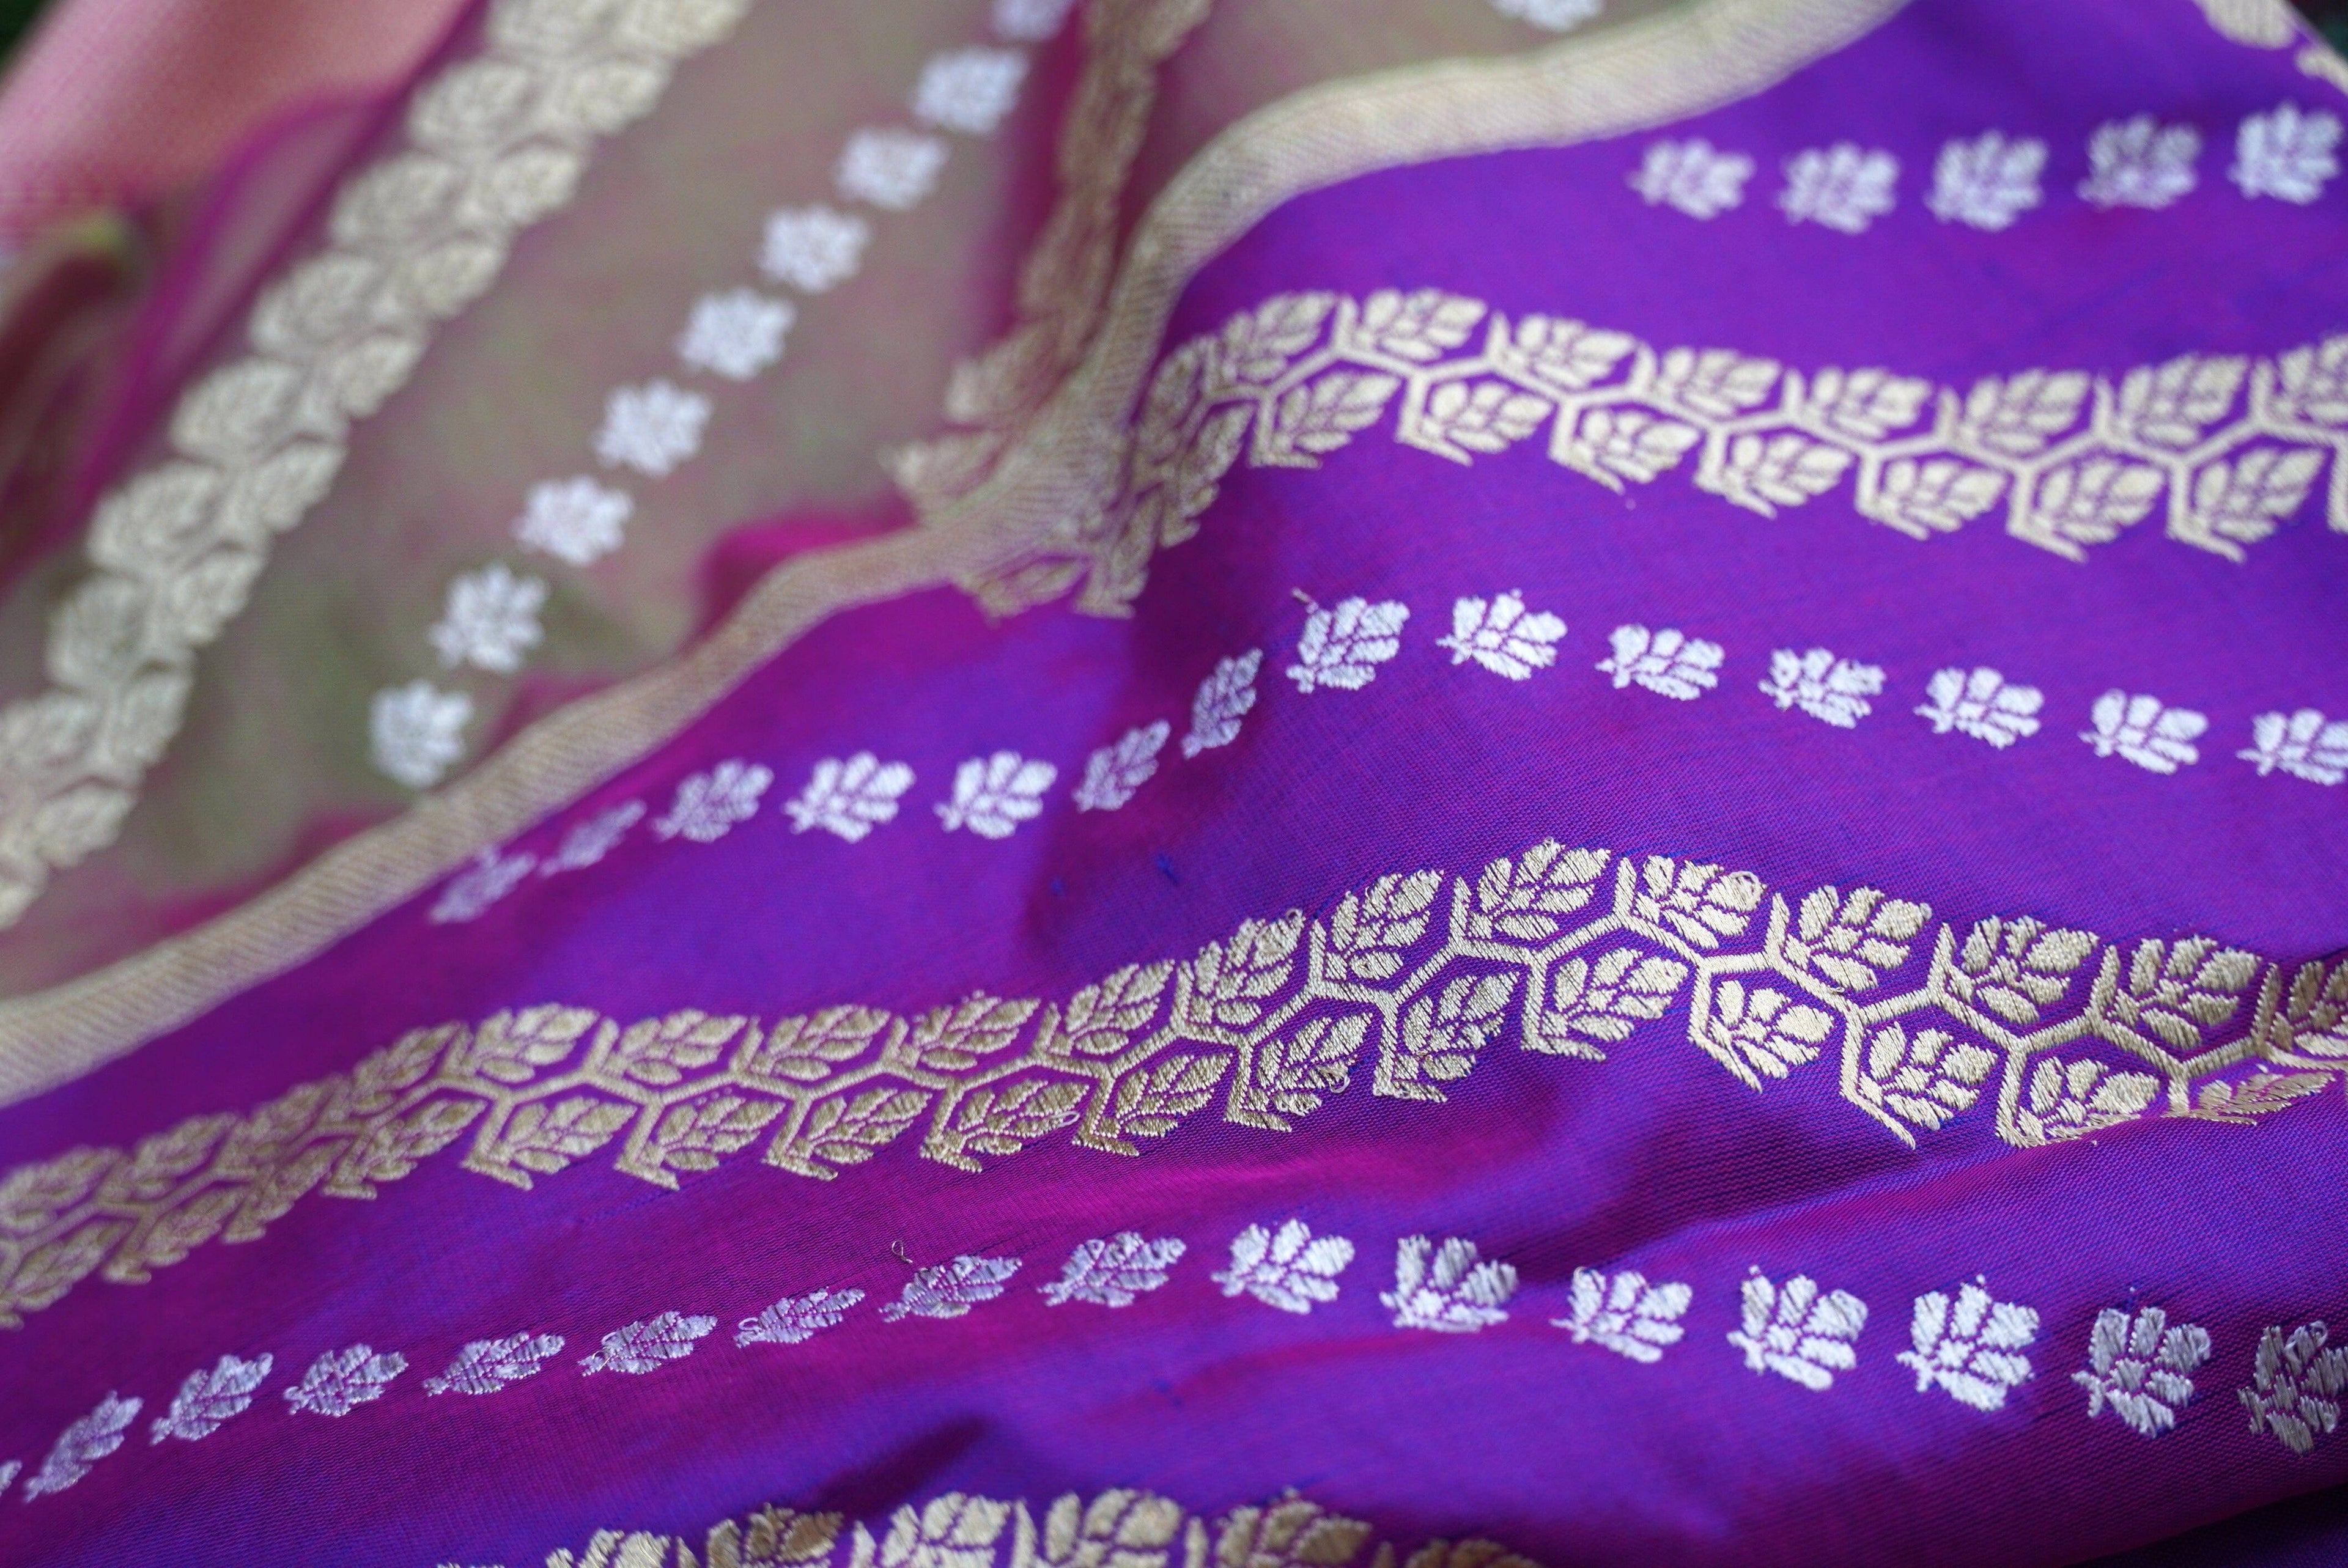 Handloom Banarasi Rangkat Silk Dupatta